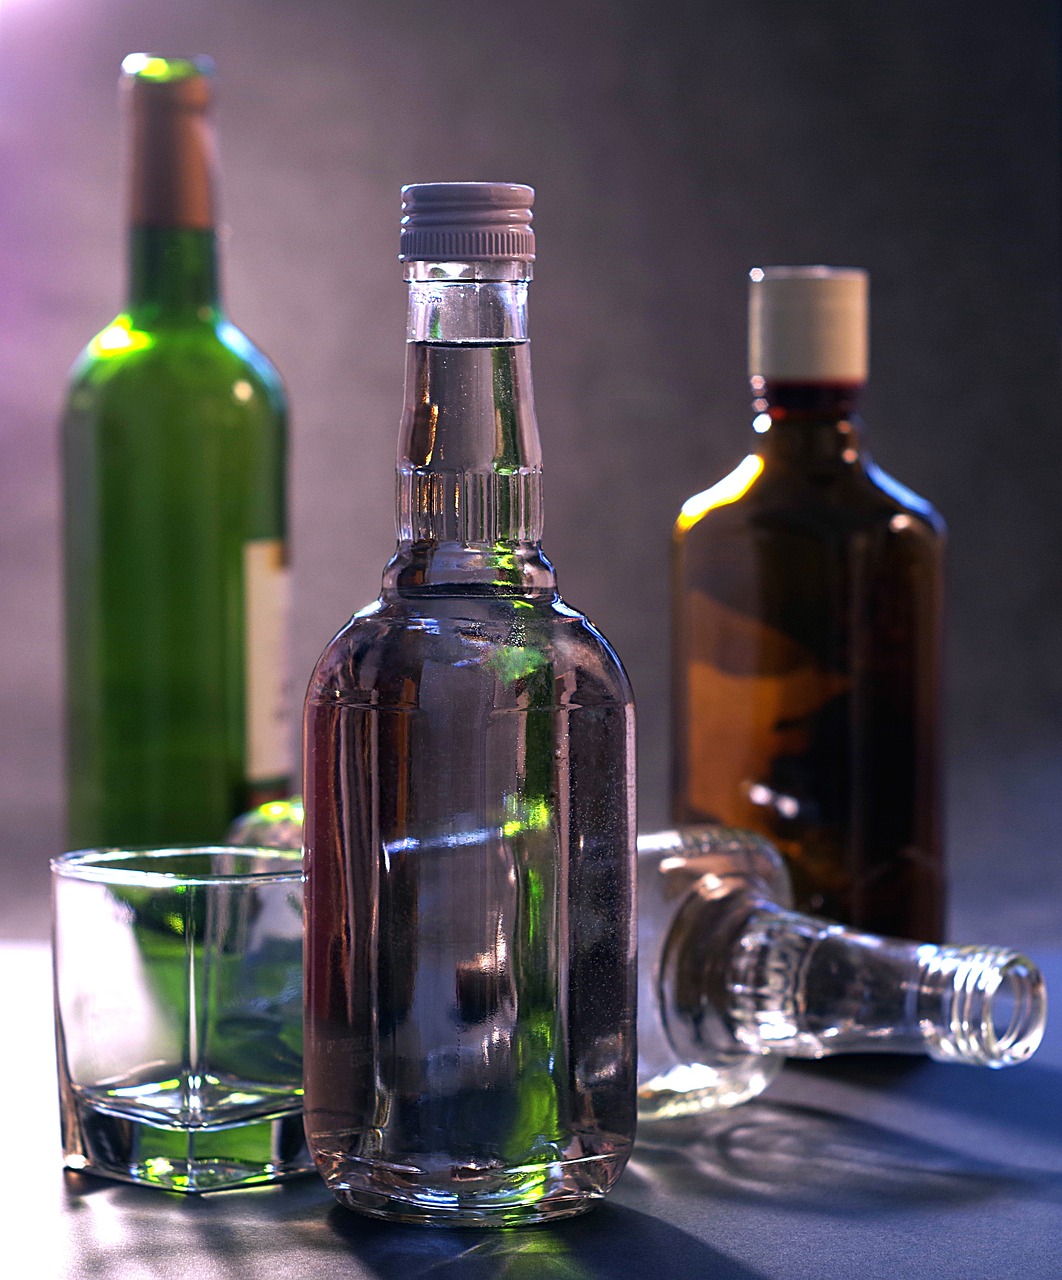 Key Factors That Affect Intoxication